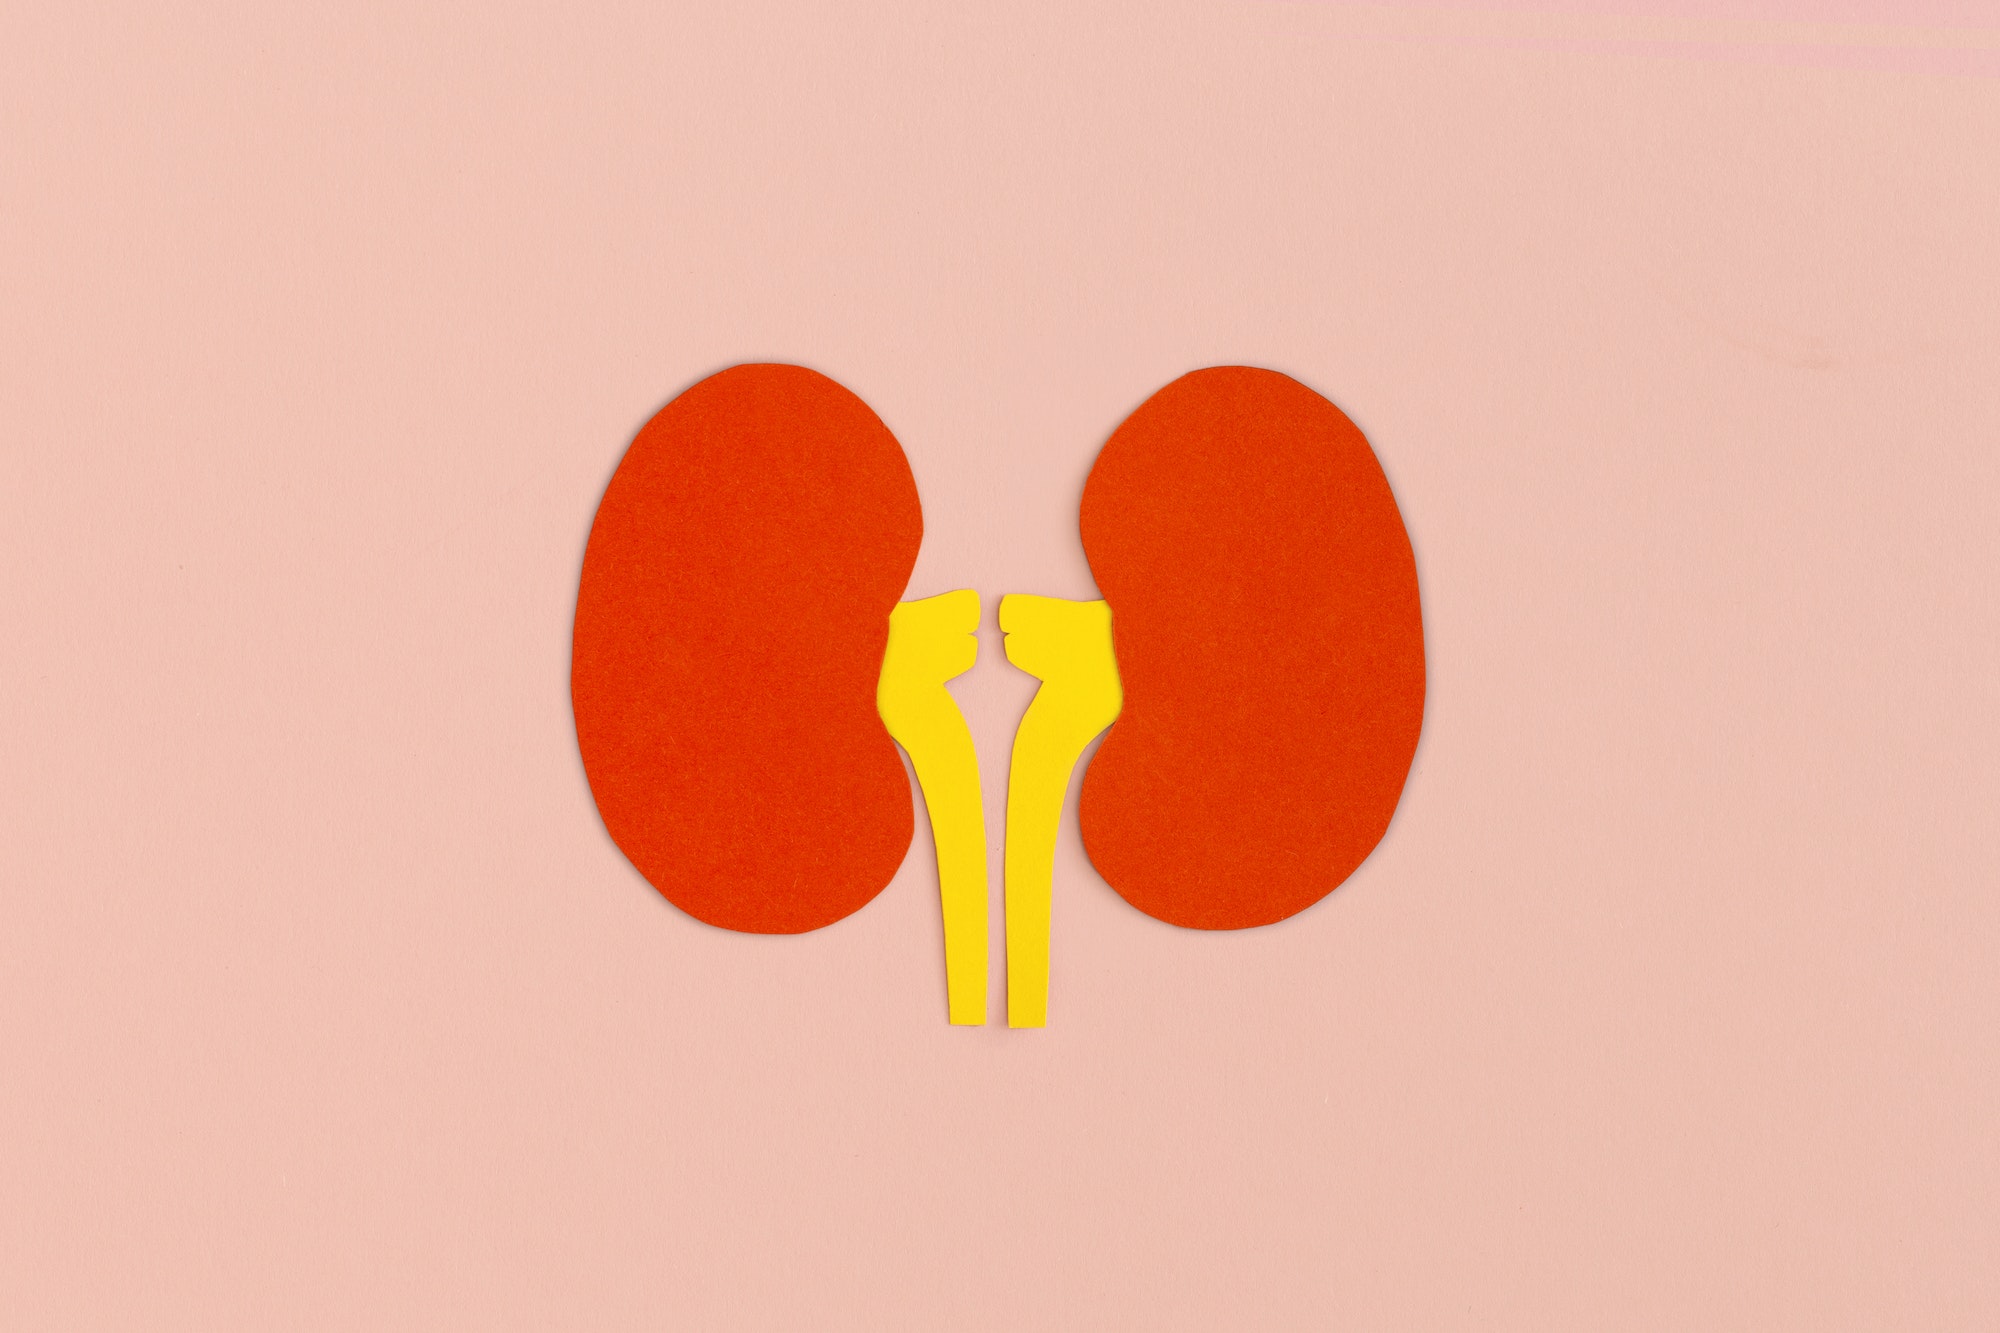 Paper kidneys on pink background